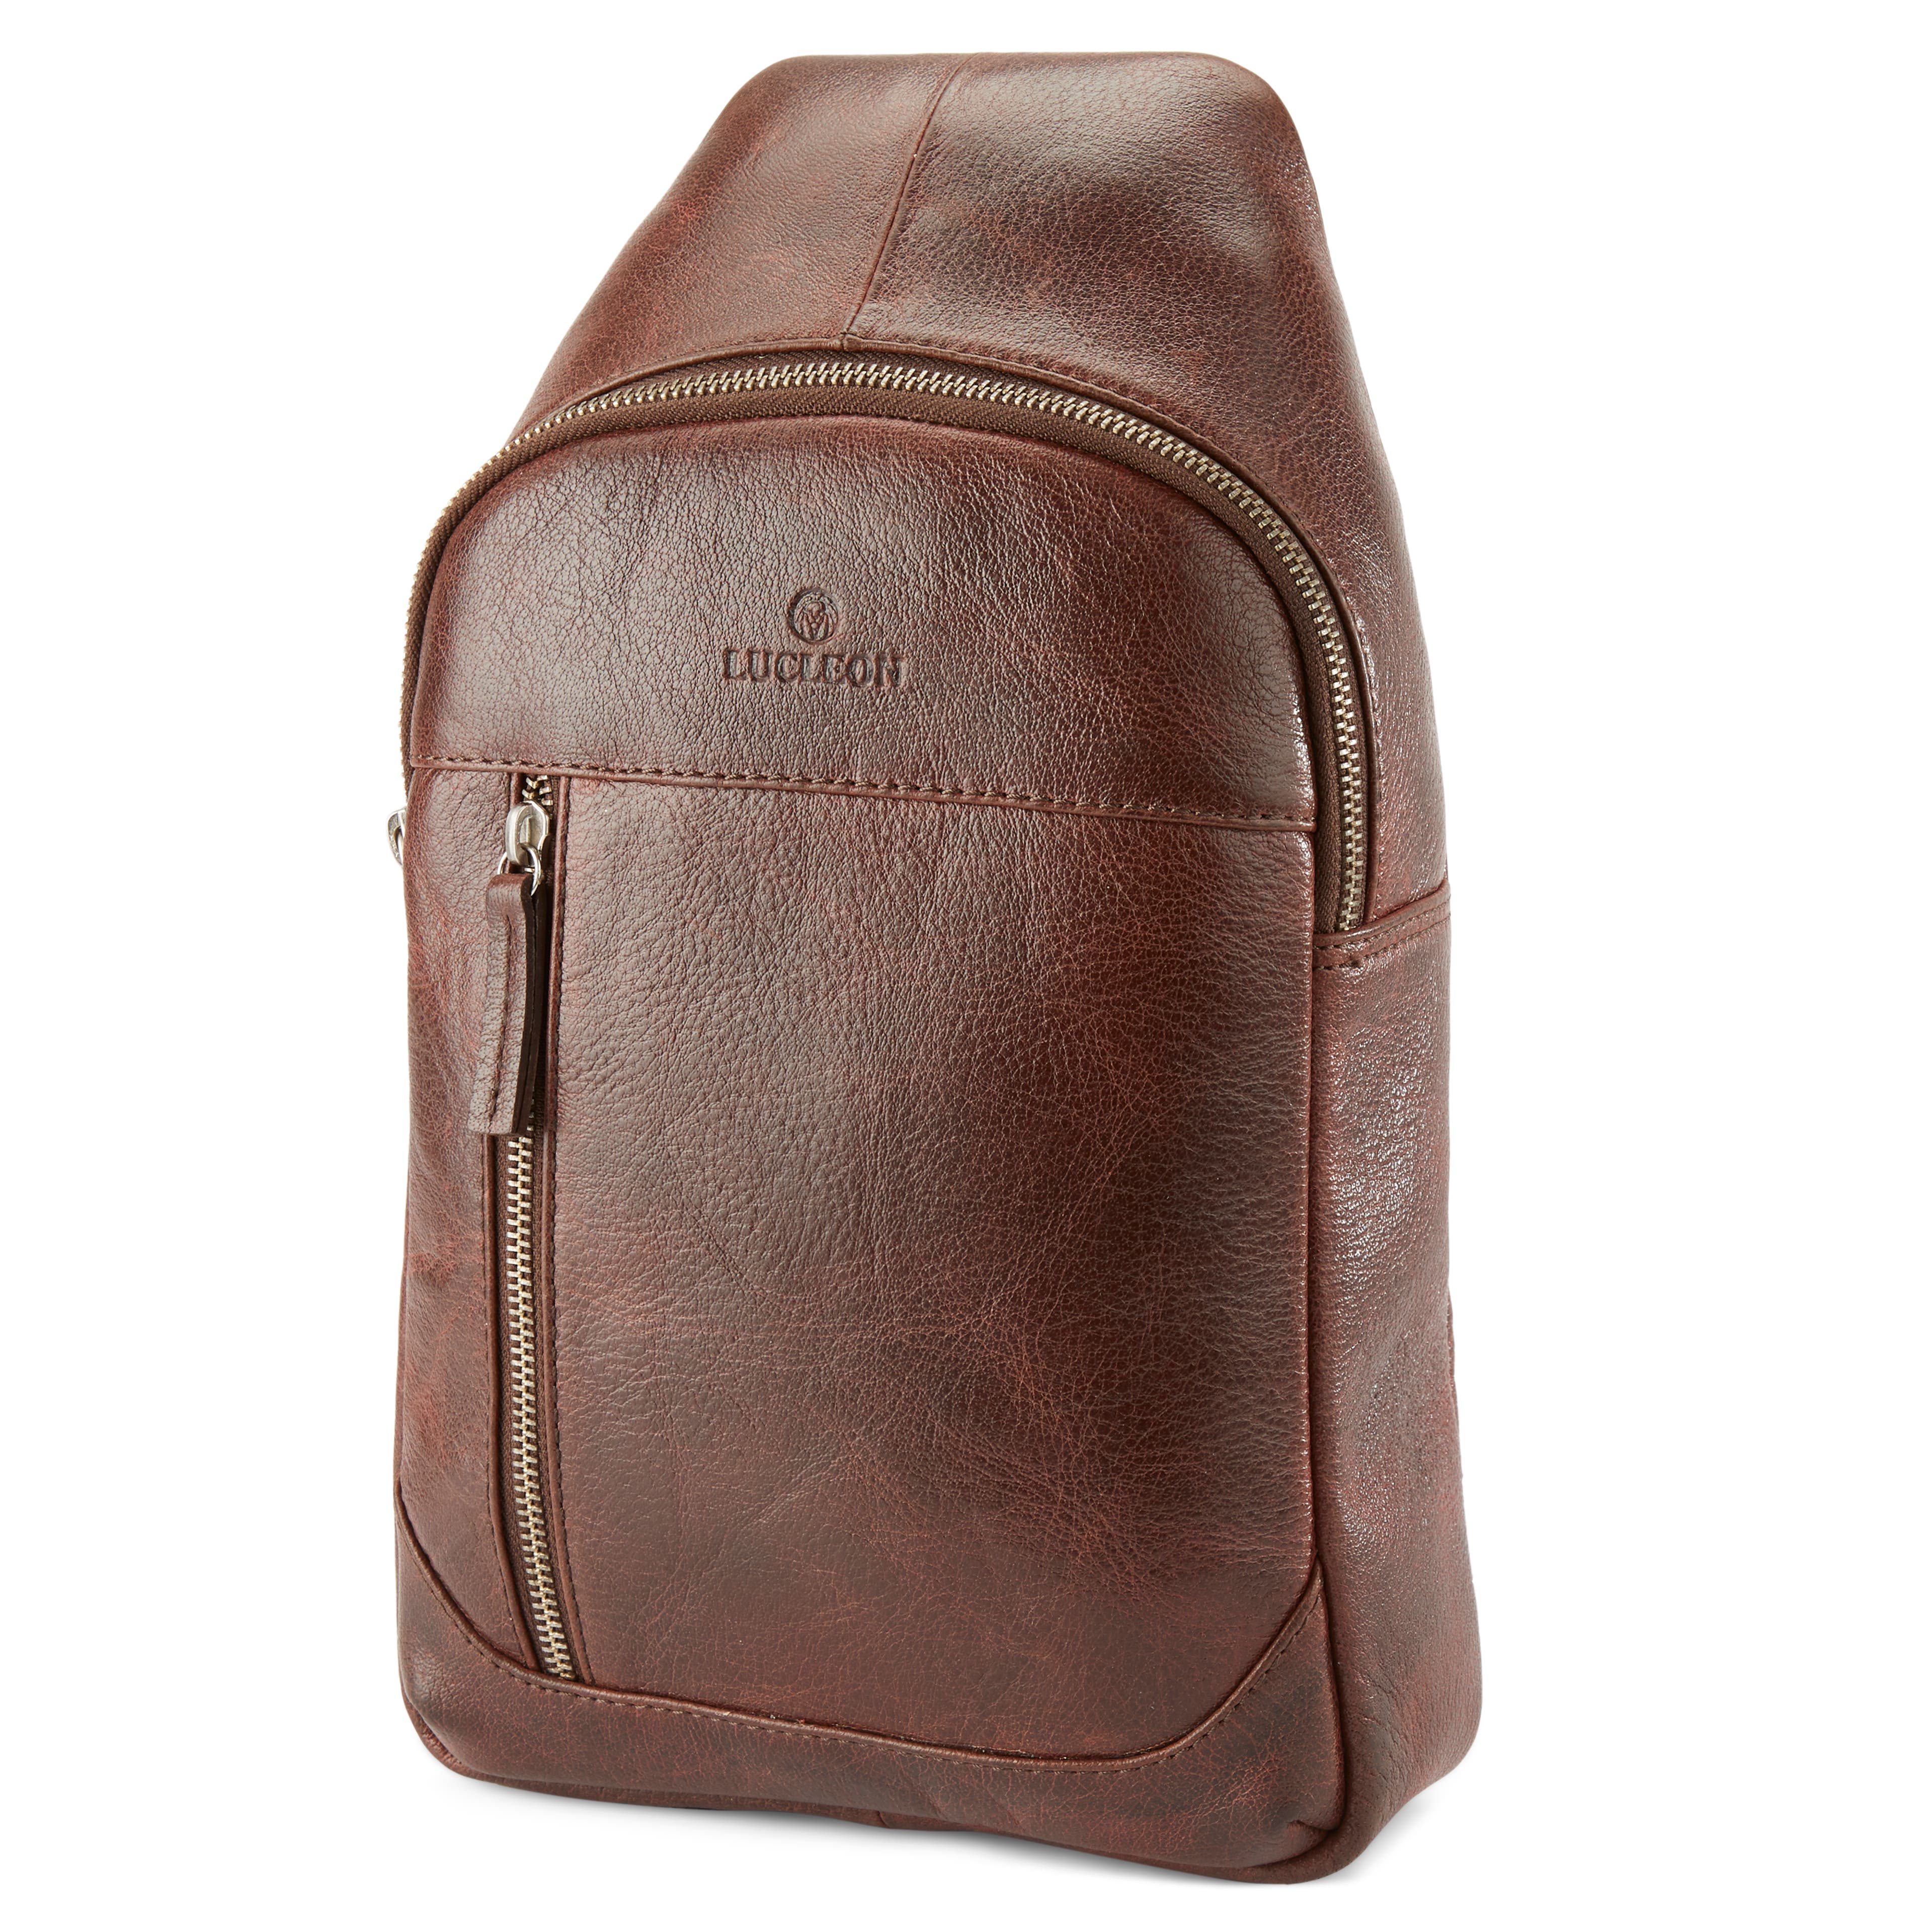 California Mini Brown Leather Sling Bag